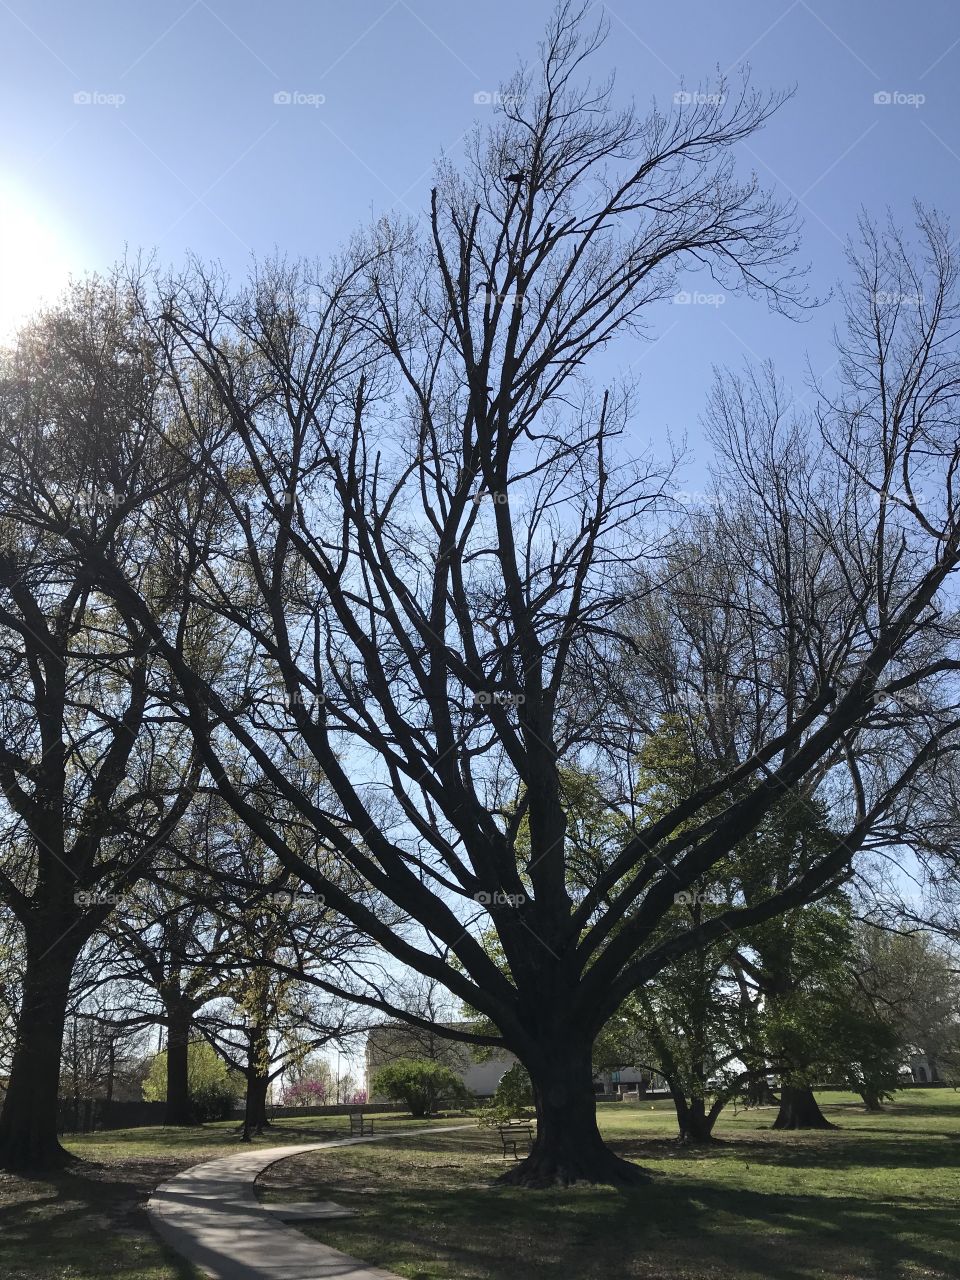 Southern Ted Oak tree